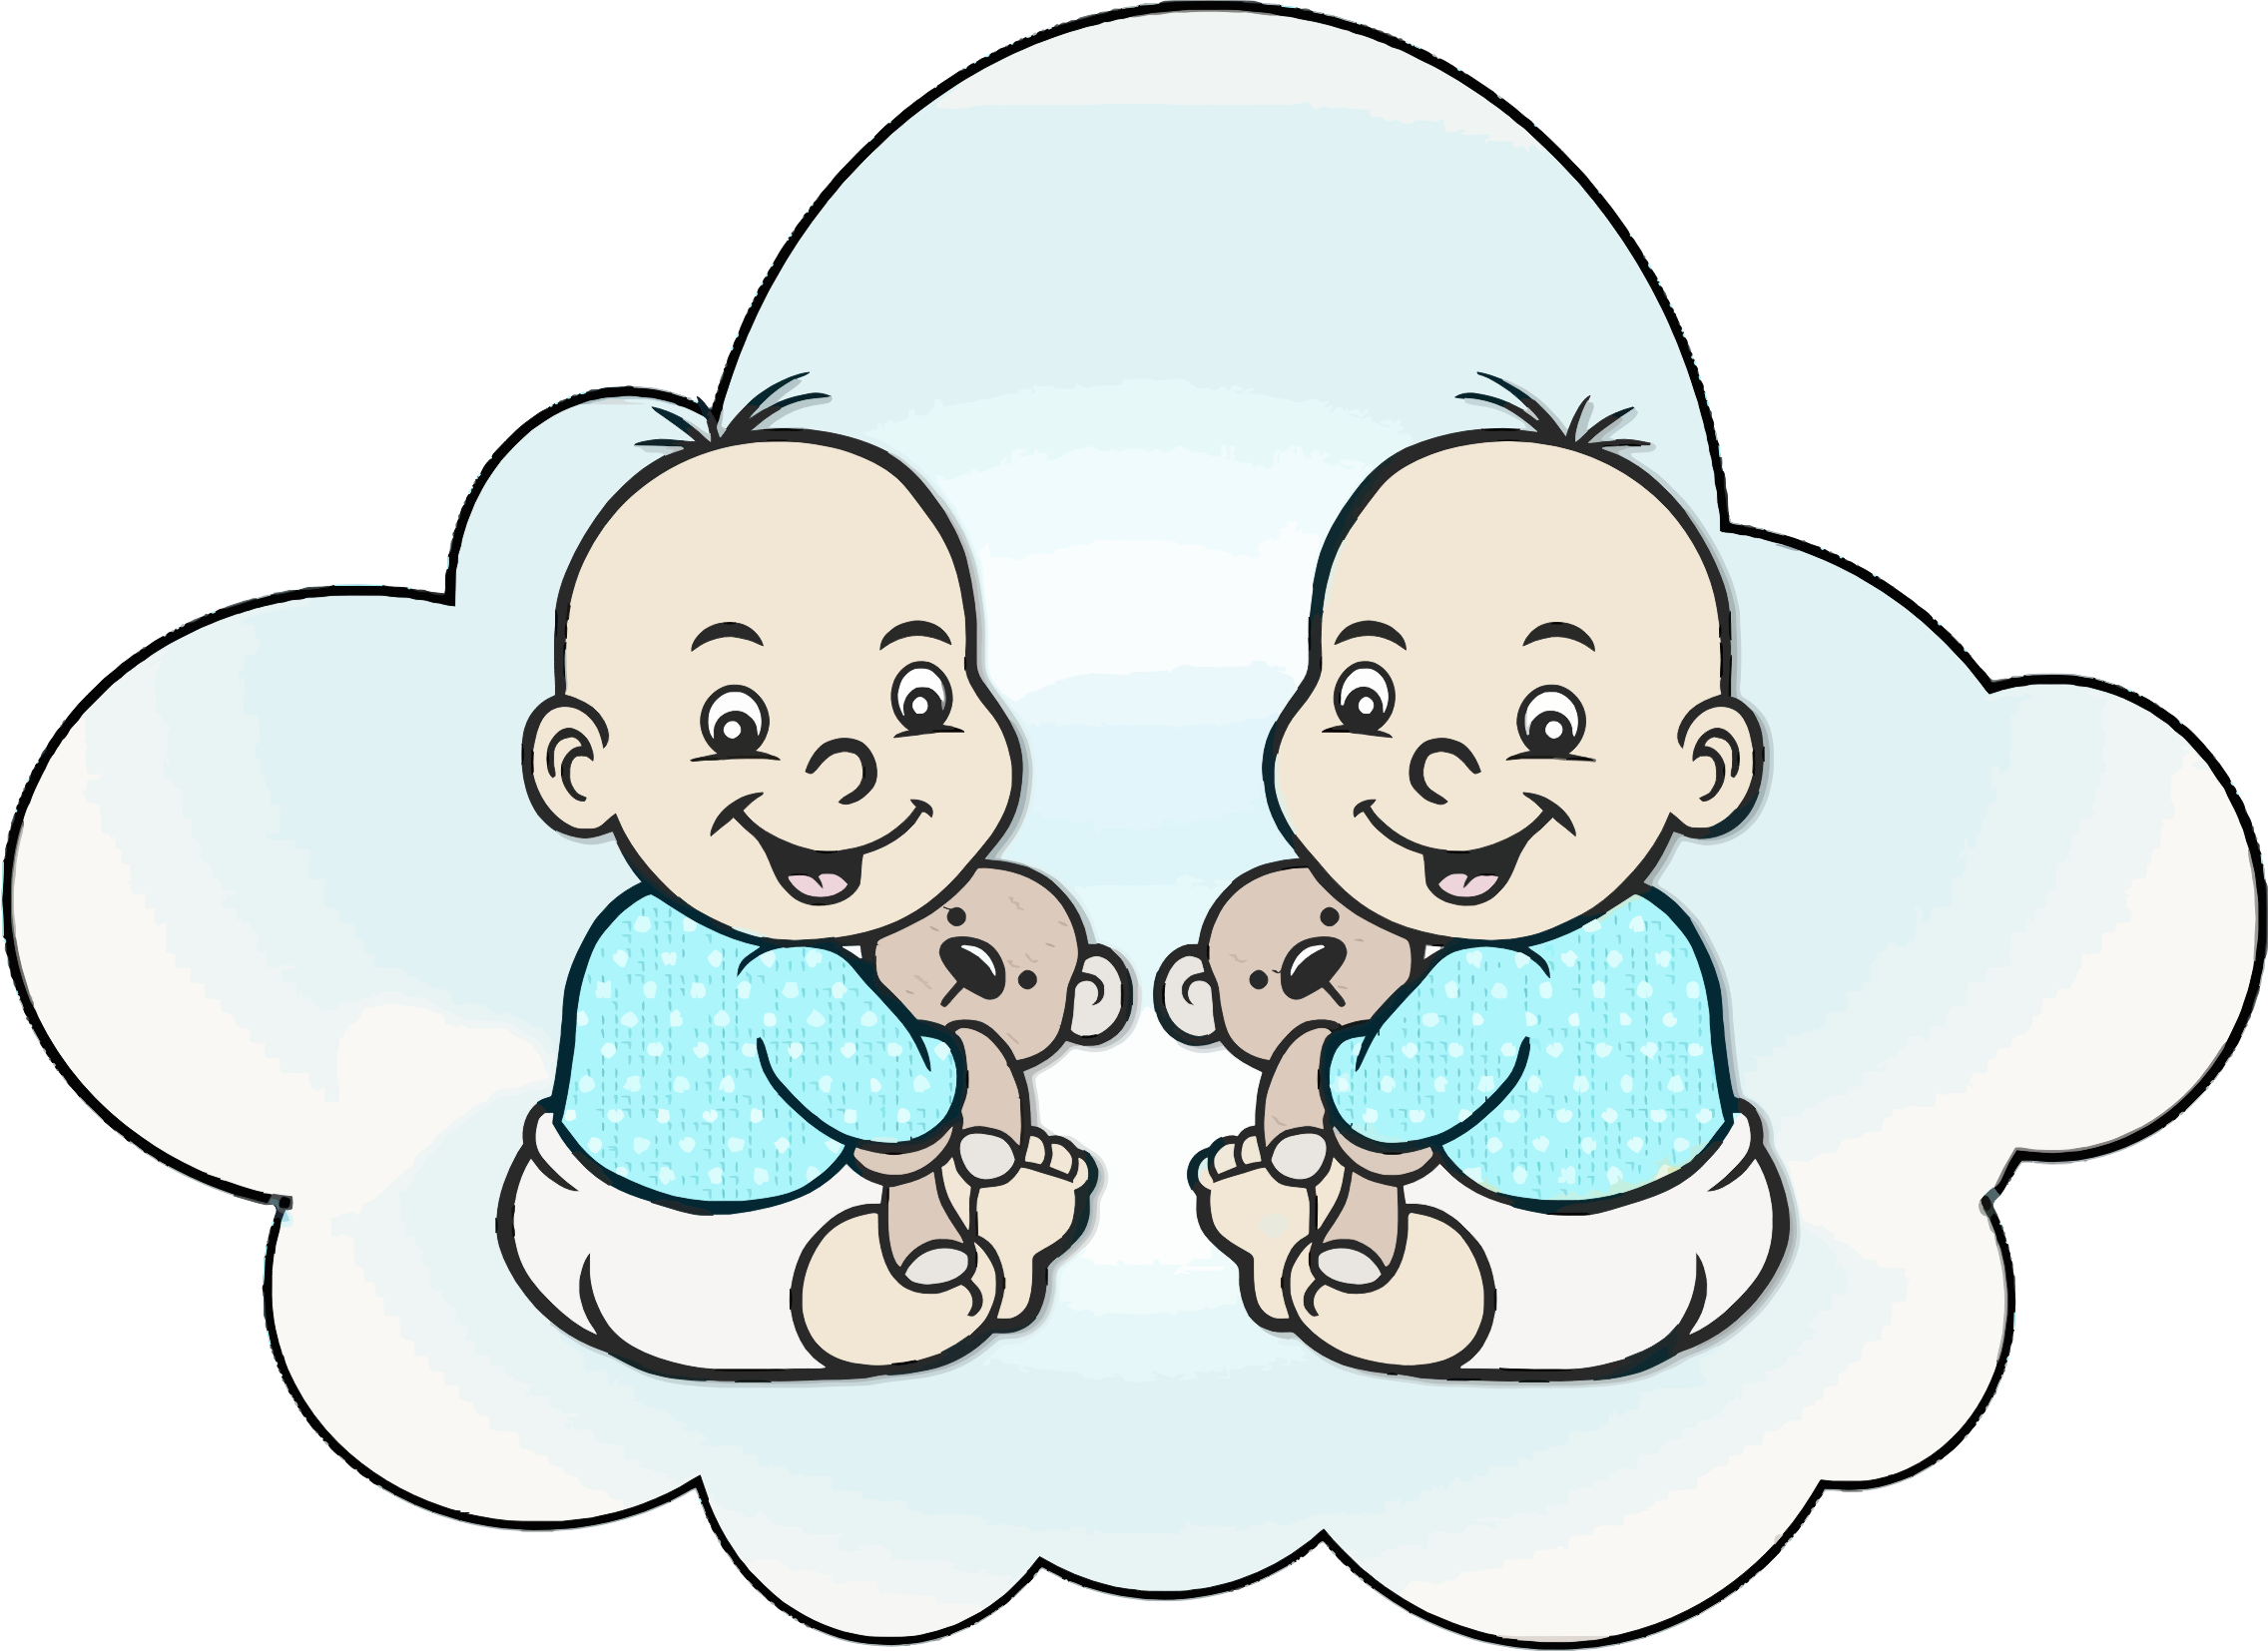 Cloud Babies Vector Files image - Free stock photo ...